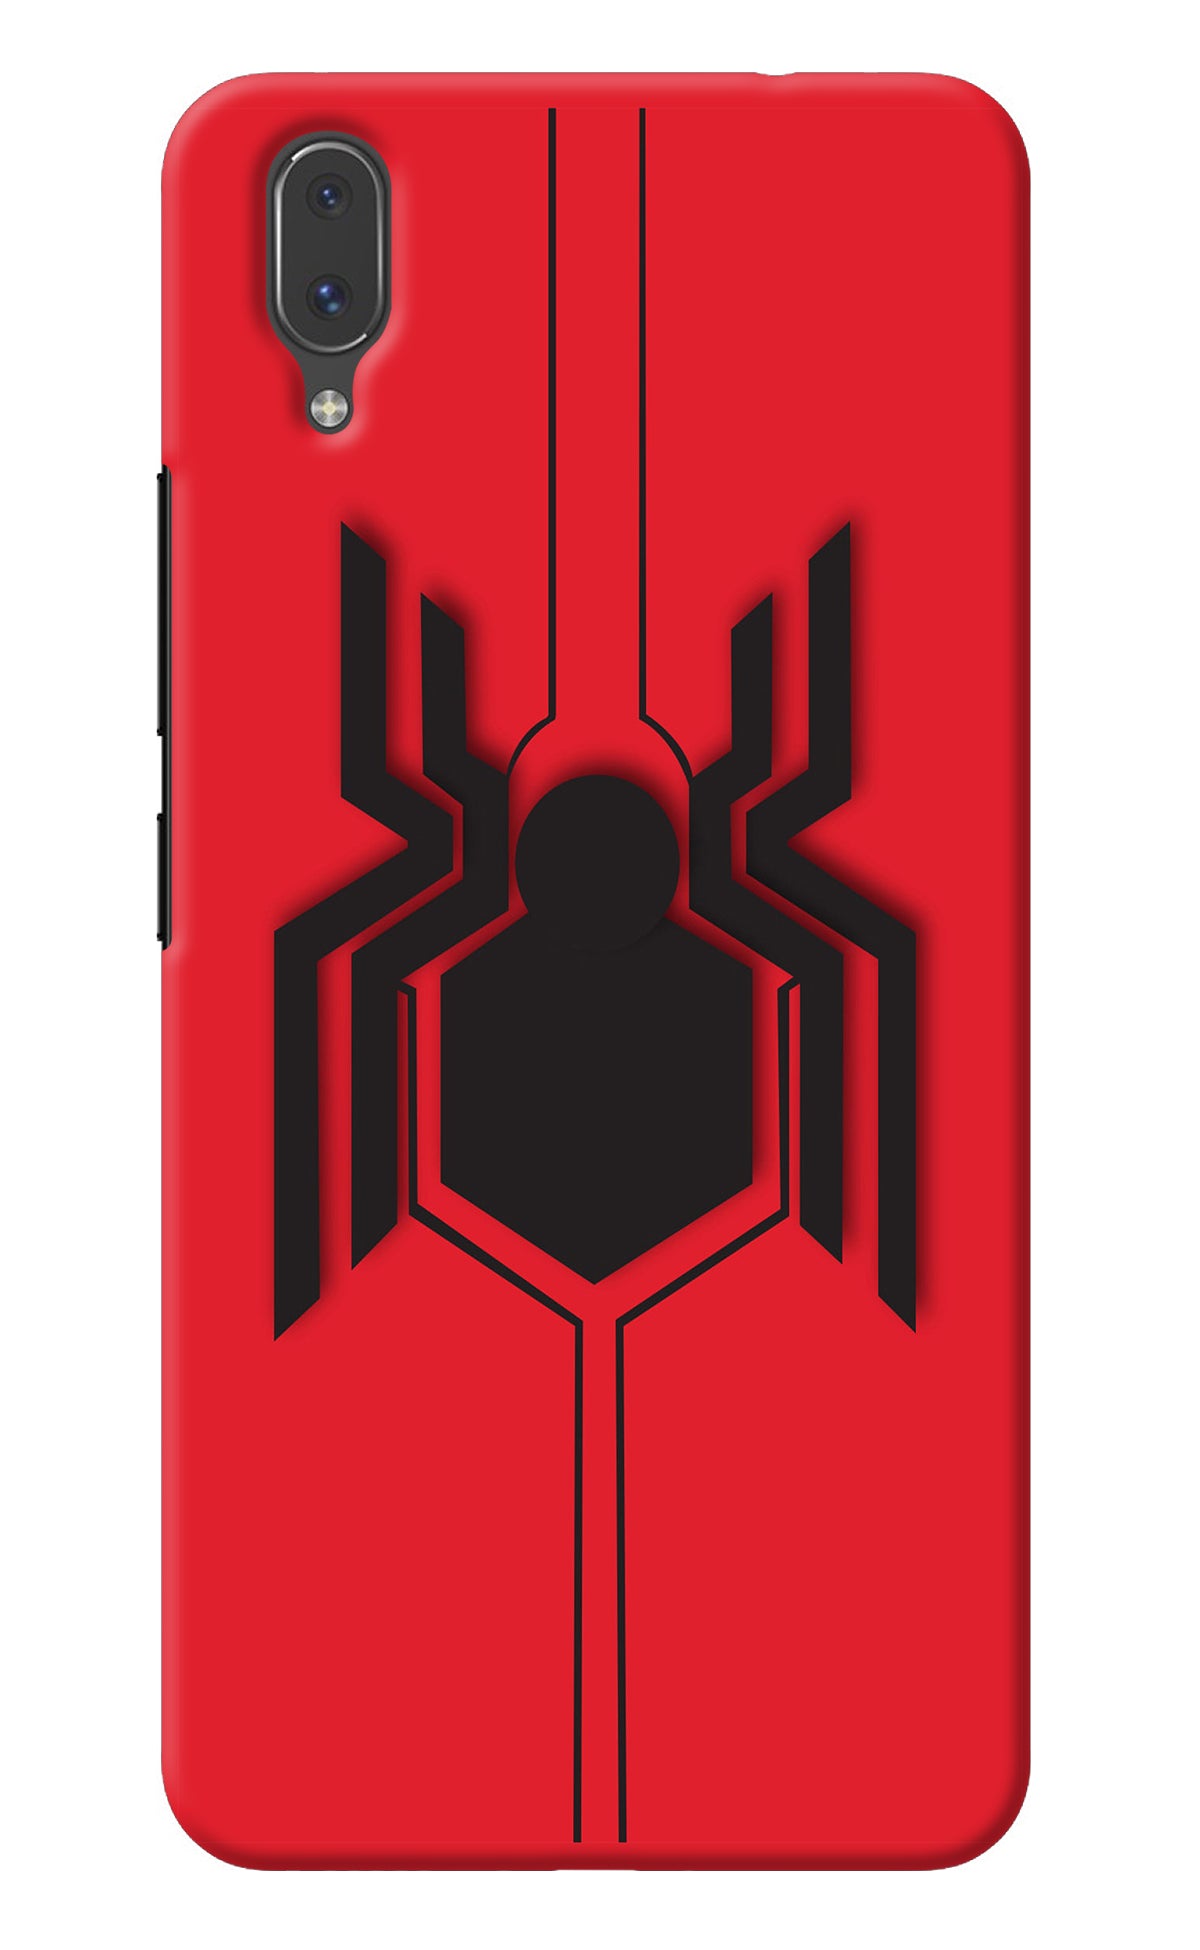 Spider Vivo X21 Back Cover